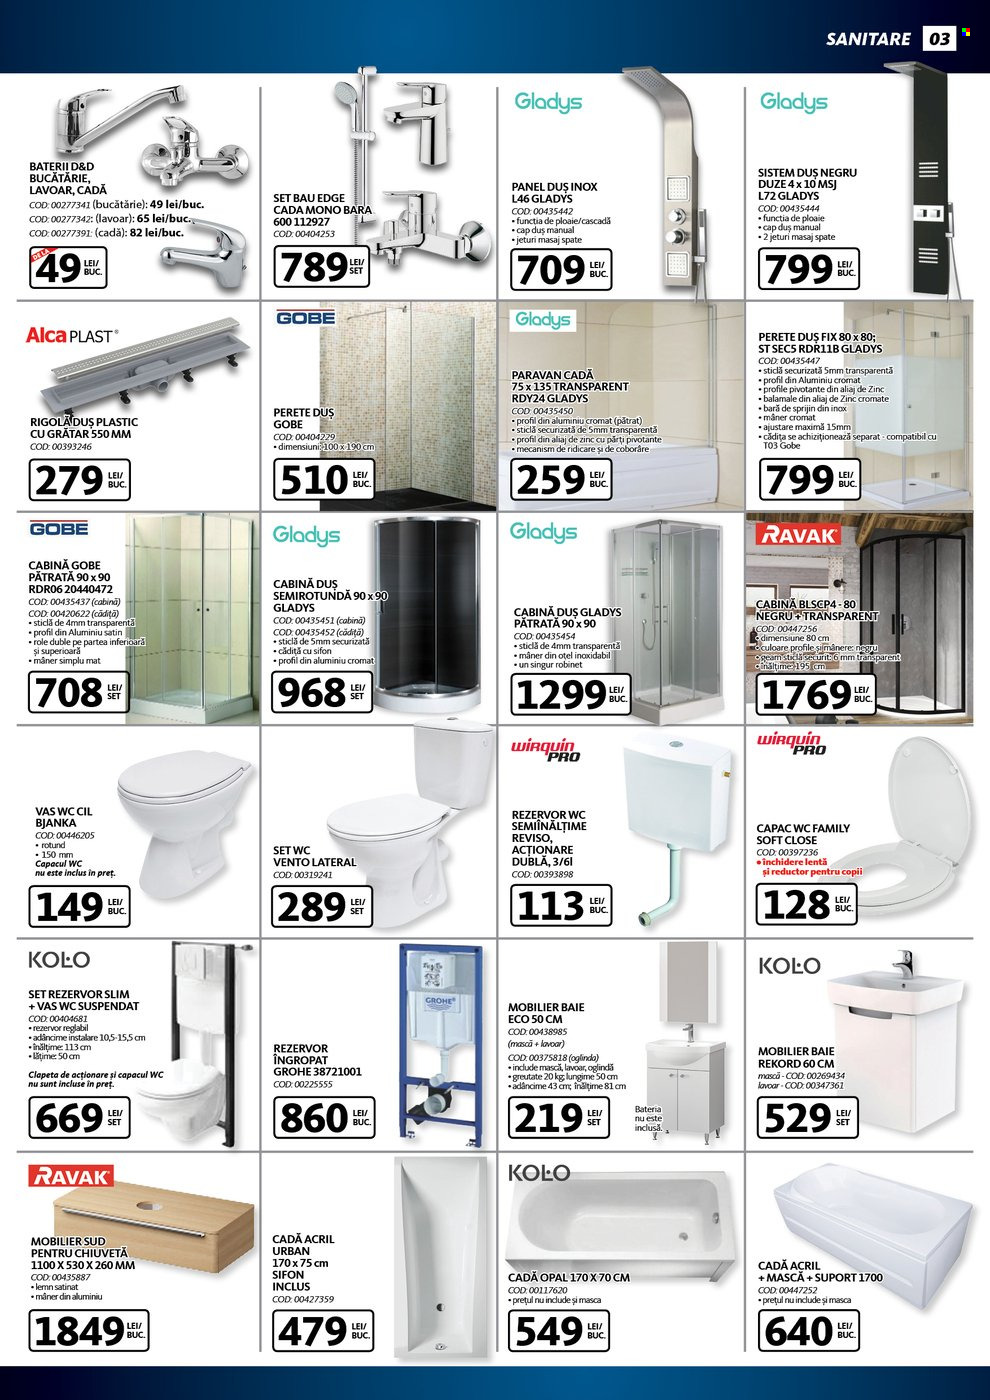 thumbnail - Cataloage Ambient - 16.09.2021 - 10.11.2021 - Produse în vânzare - cabine de duş, capace wc, vase wc, lavoar, paravan cadă, rezervoare wc, chiuveta, mobilier baie. Pagina 3.